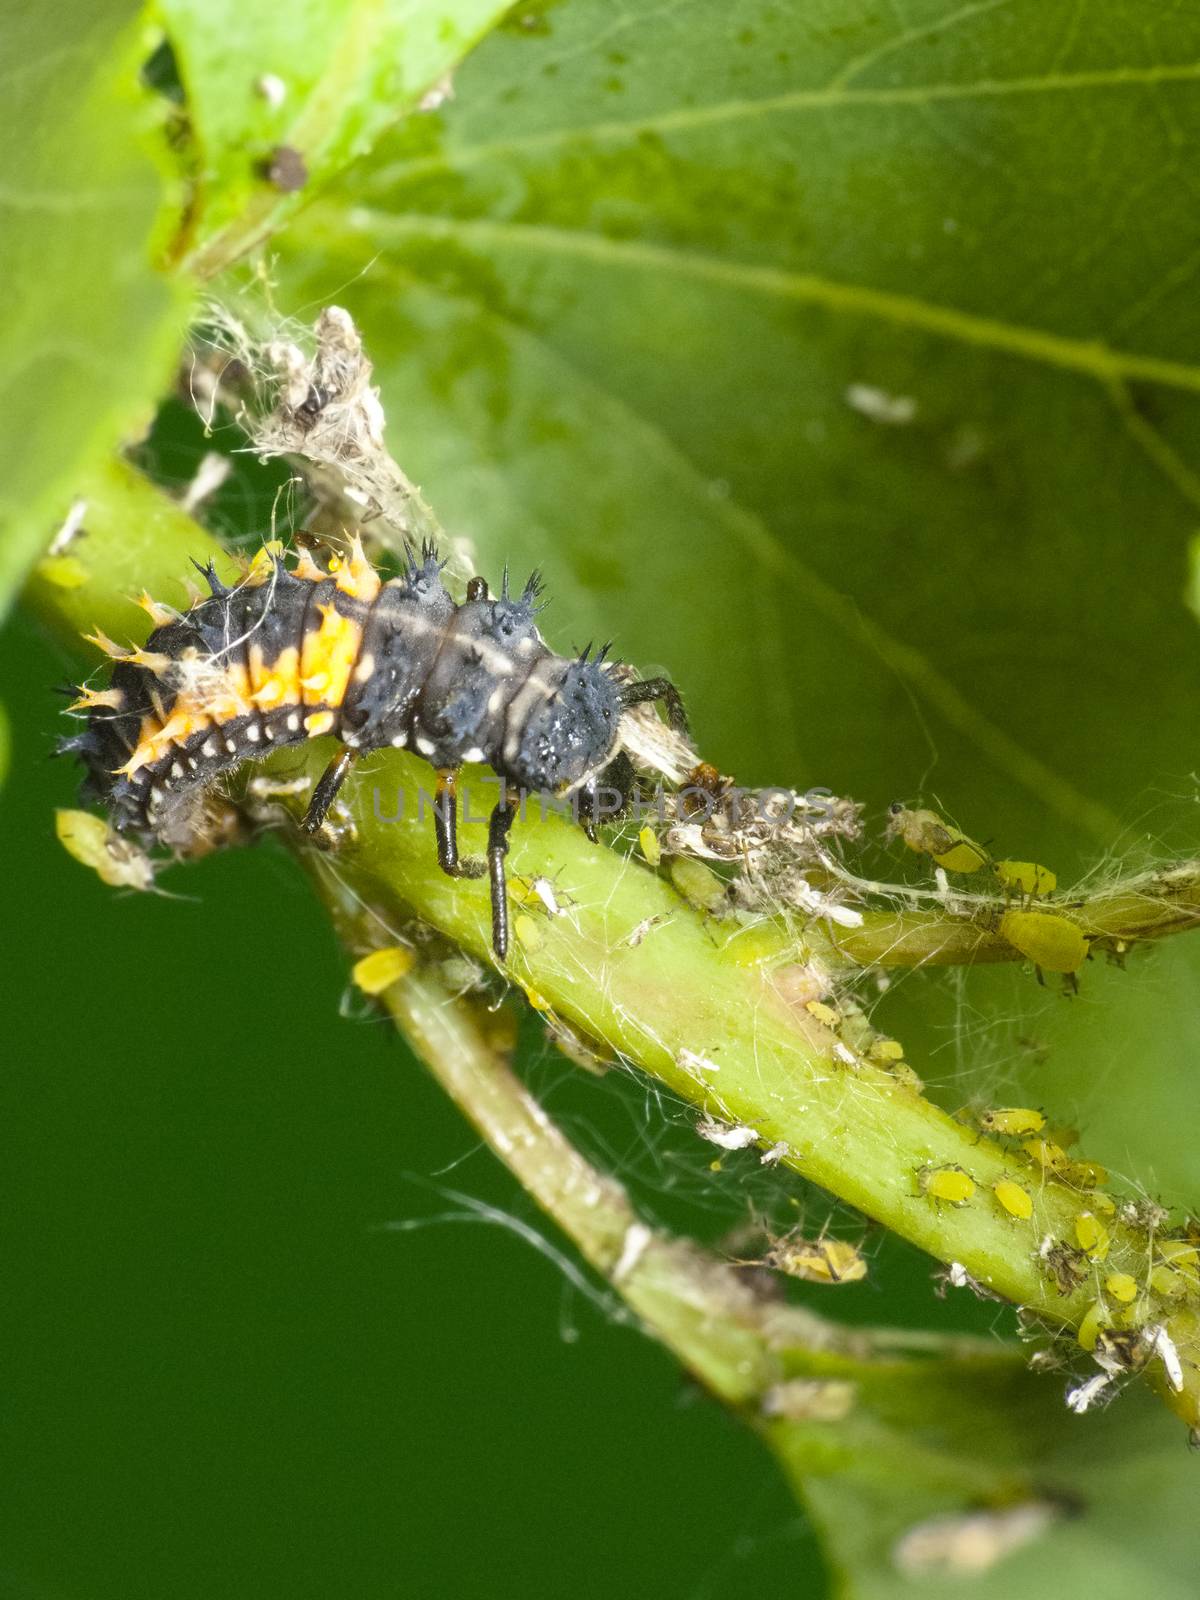 Ladybug larva feeds on aphids on infected plant